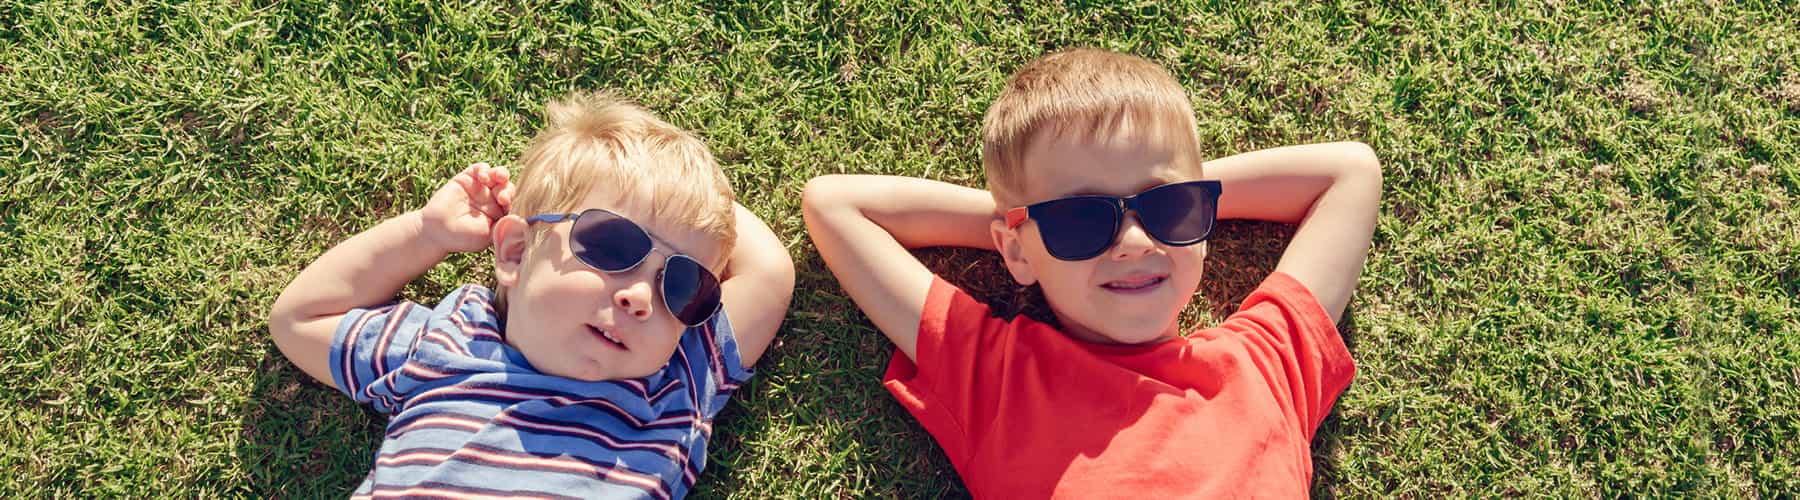 two children wearing sunglasses